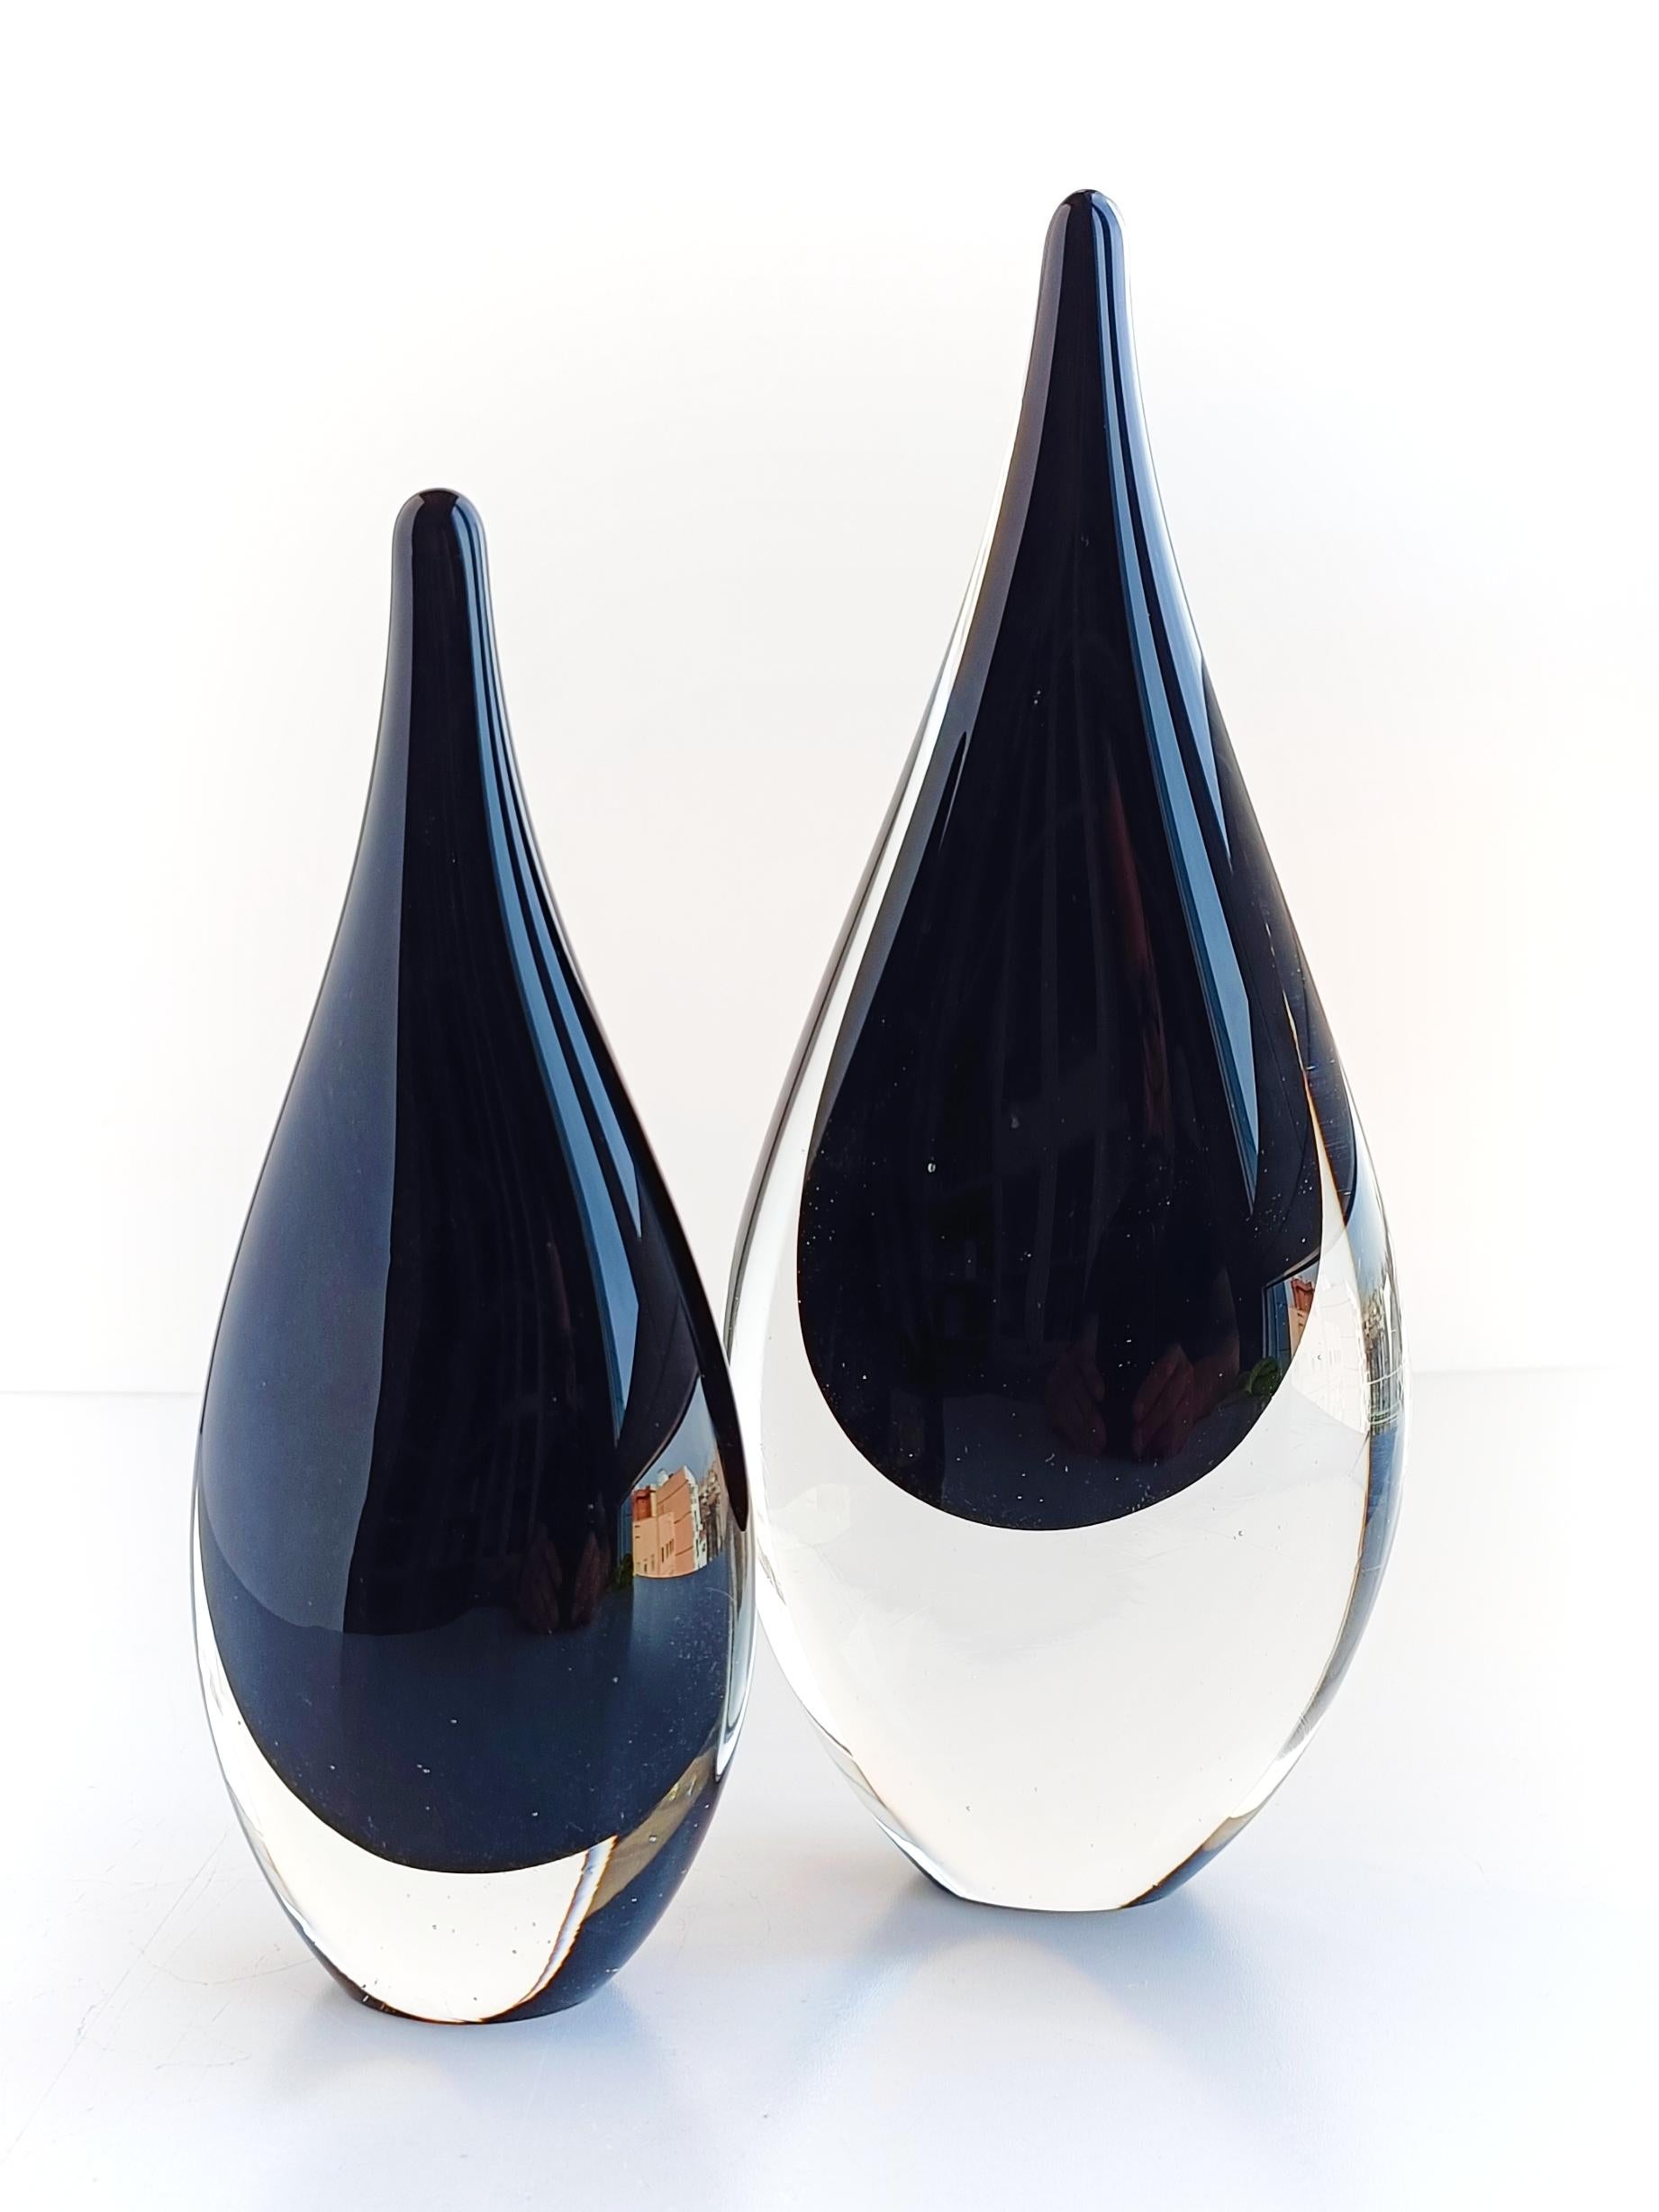 Vintage Italian Art Glass Minimalist Murano Sommerso Teardrop Sculptures, 1950s  For Sale 3